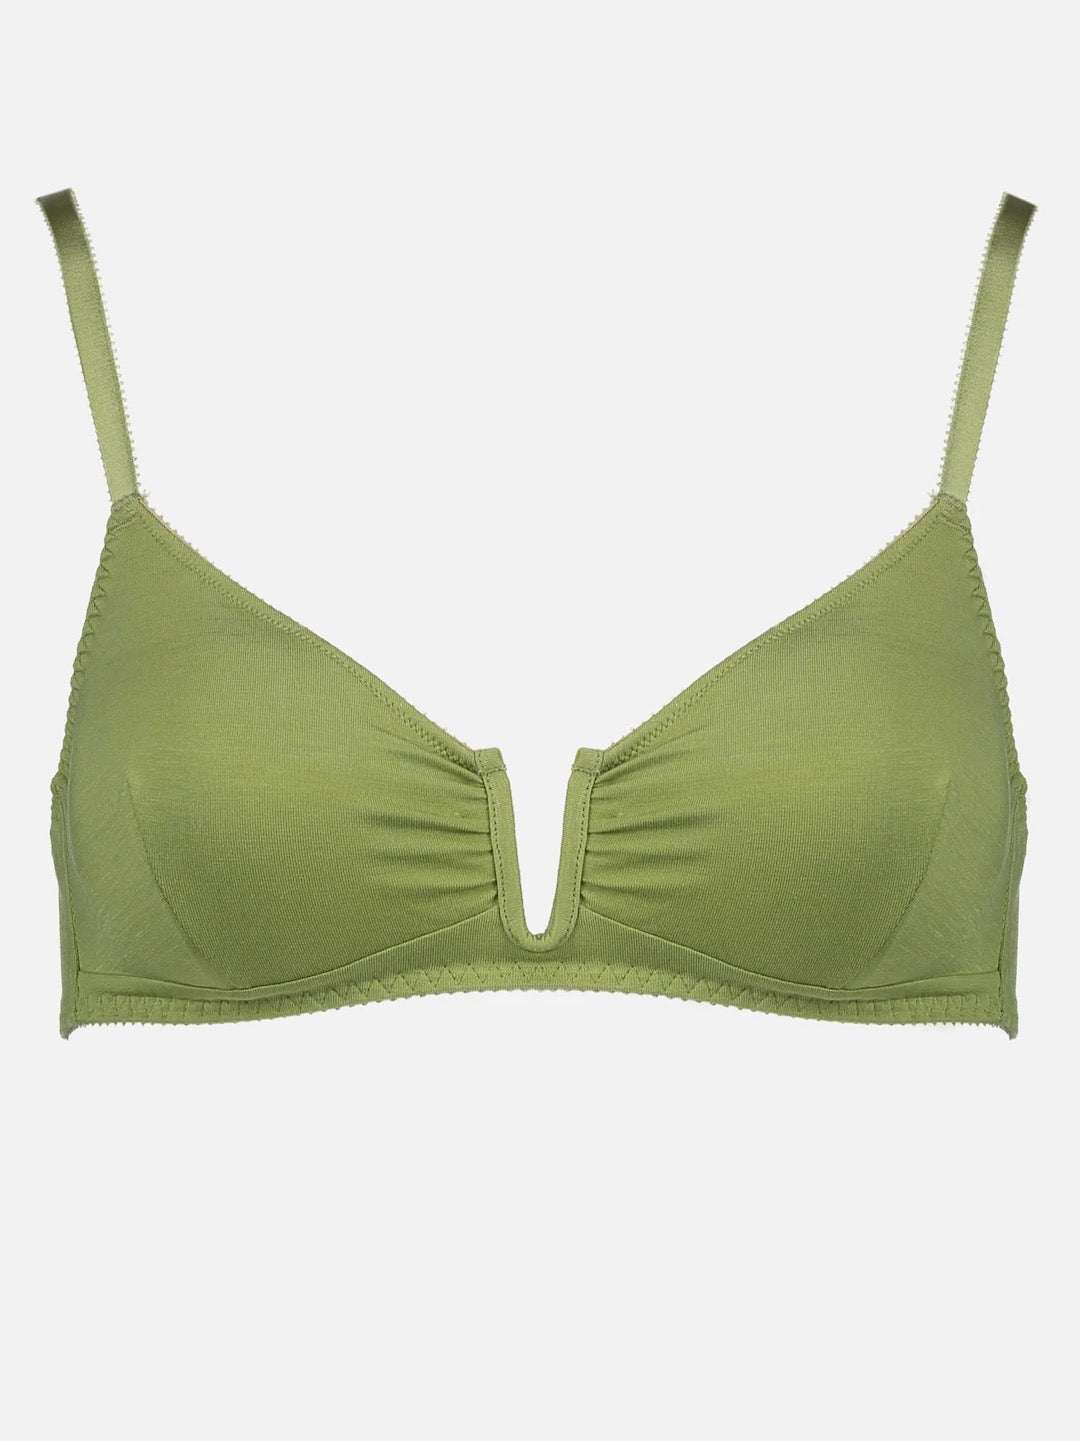 An Angela Bra - Olive by Videris, a green bikini top with a criss cross strap.